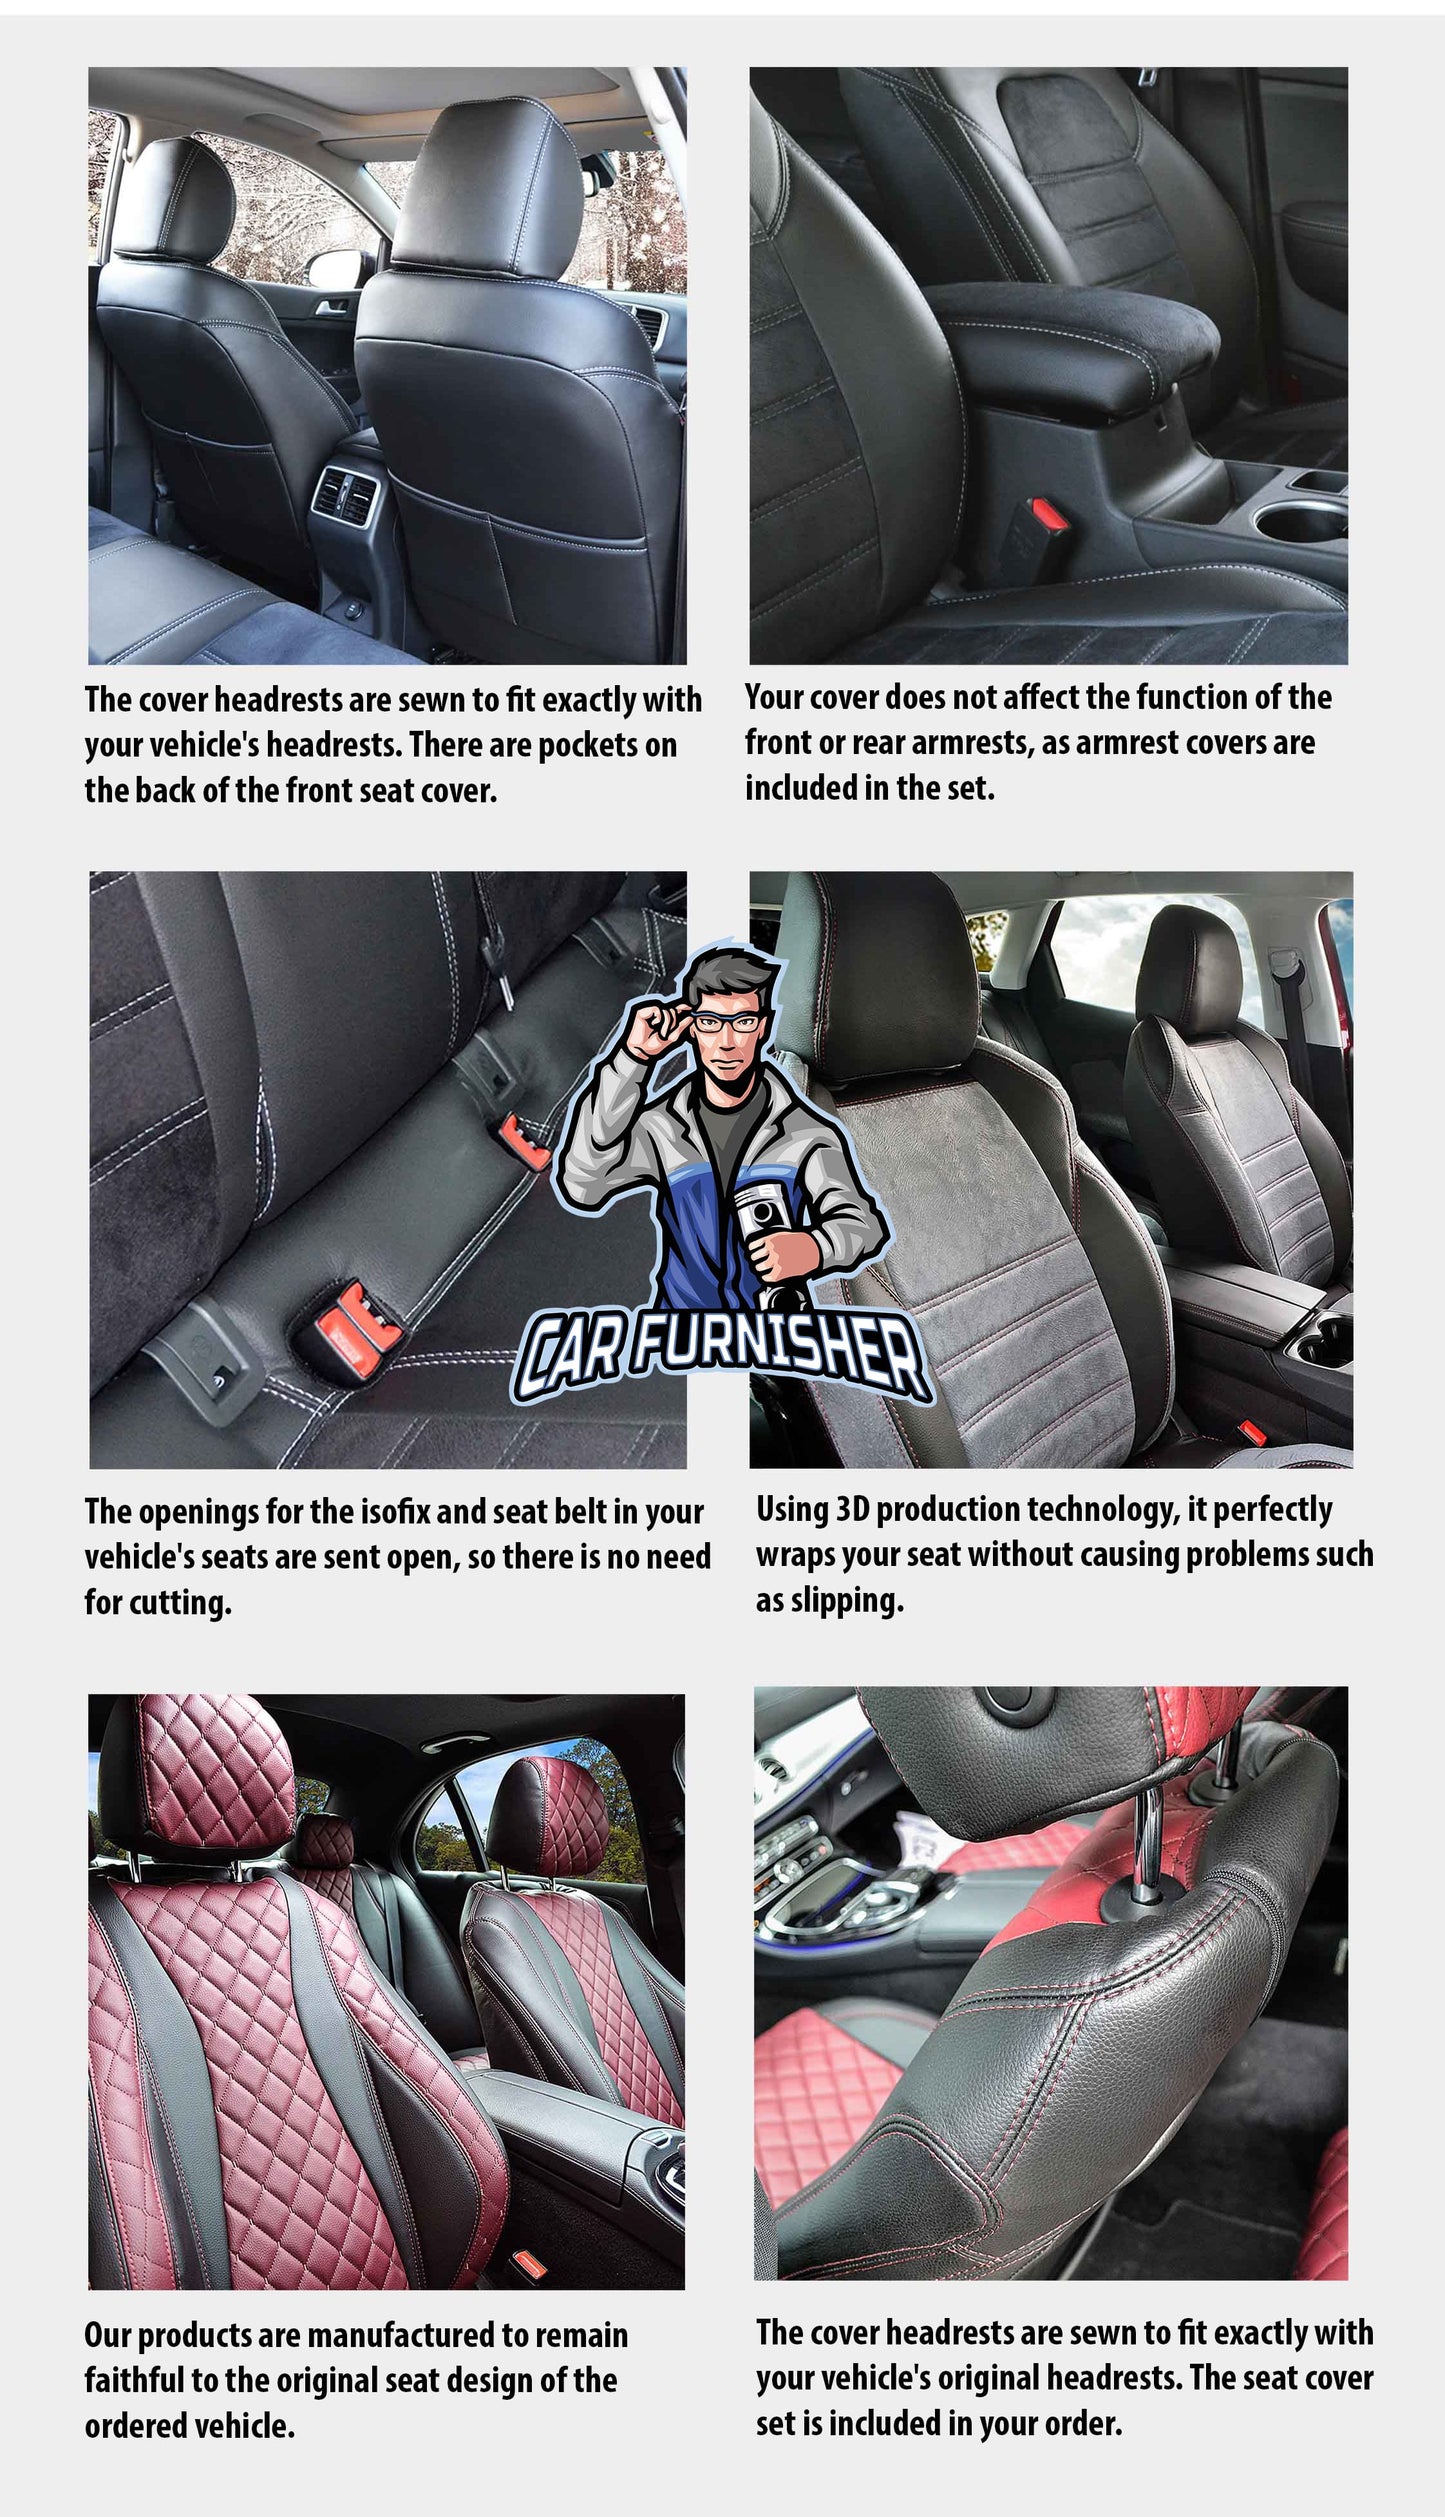 Skoda Citigo Seat Covers Istanbul Leather Design Smoked Leather